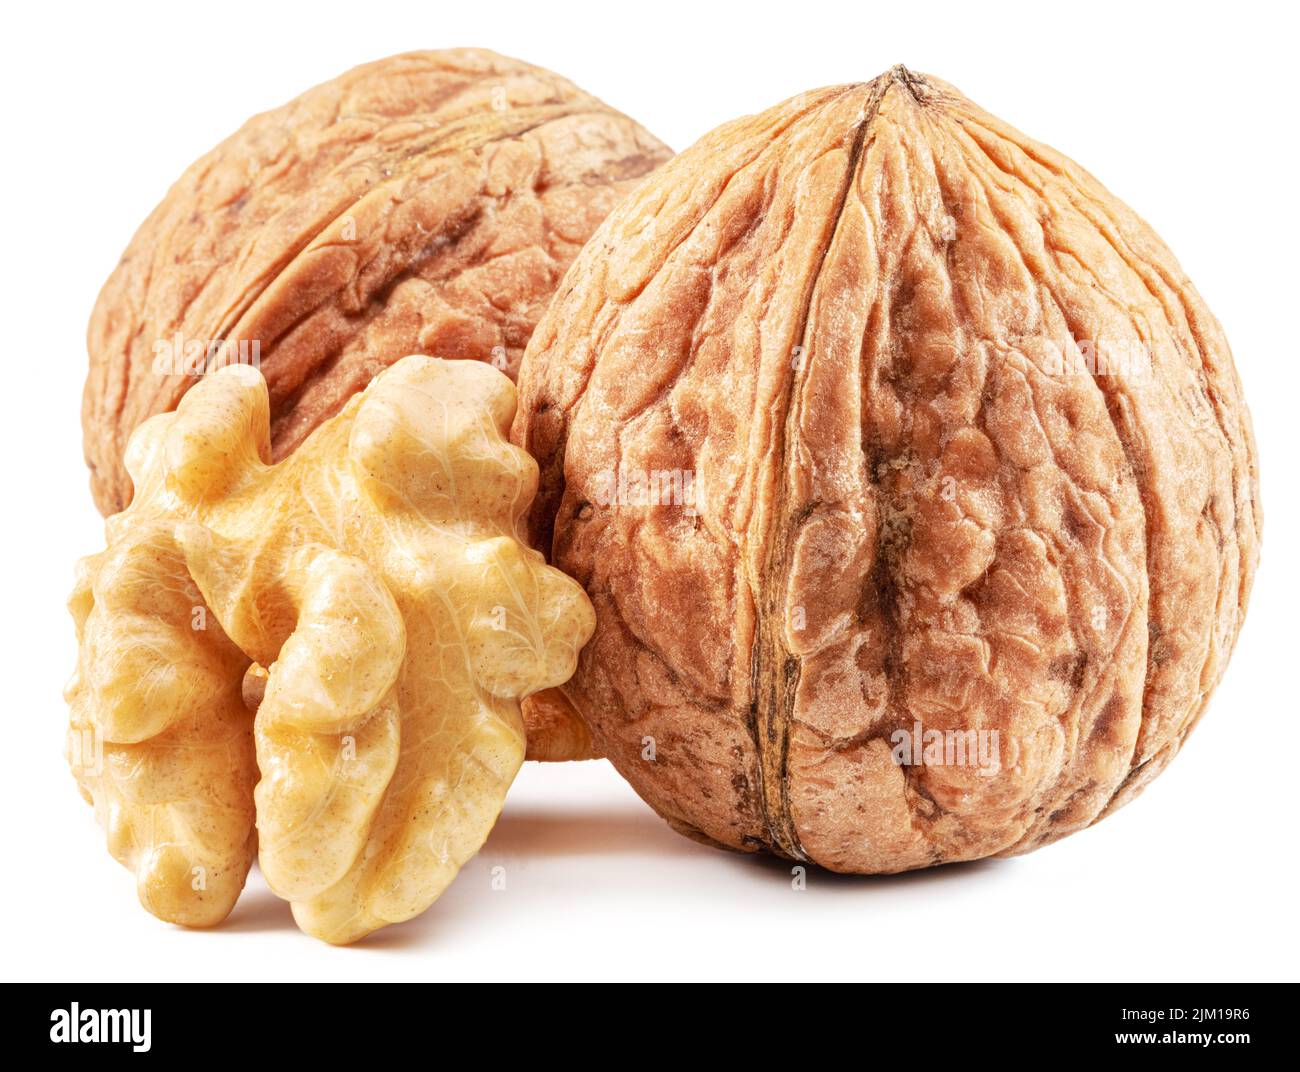 Walnuts and walnut kernel isolated on white background. Stock Photo